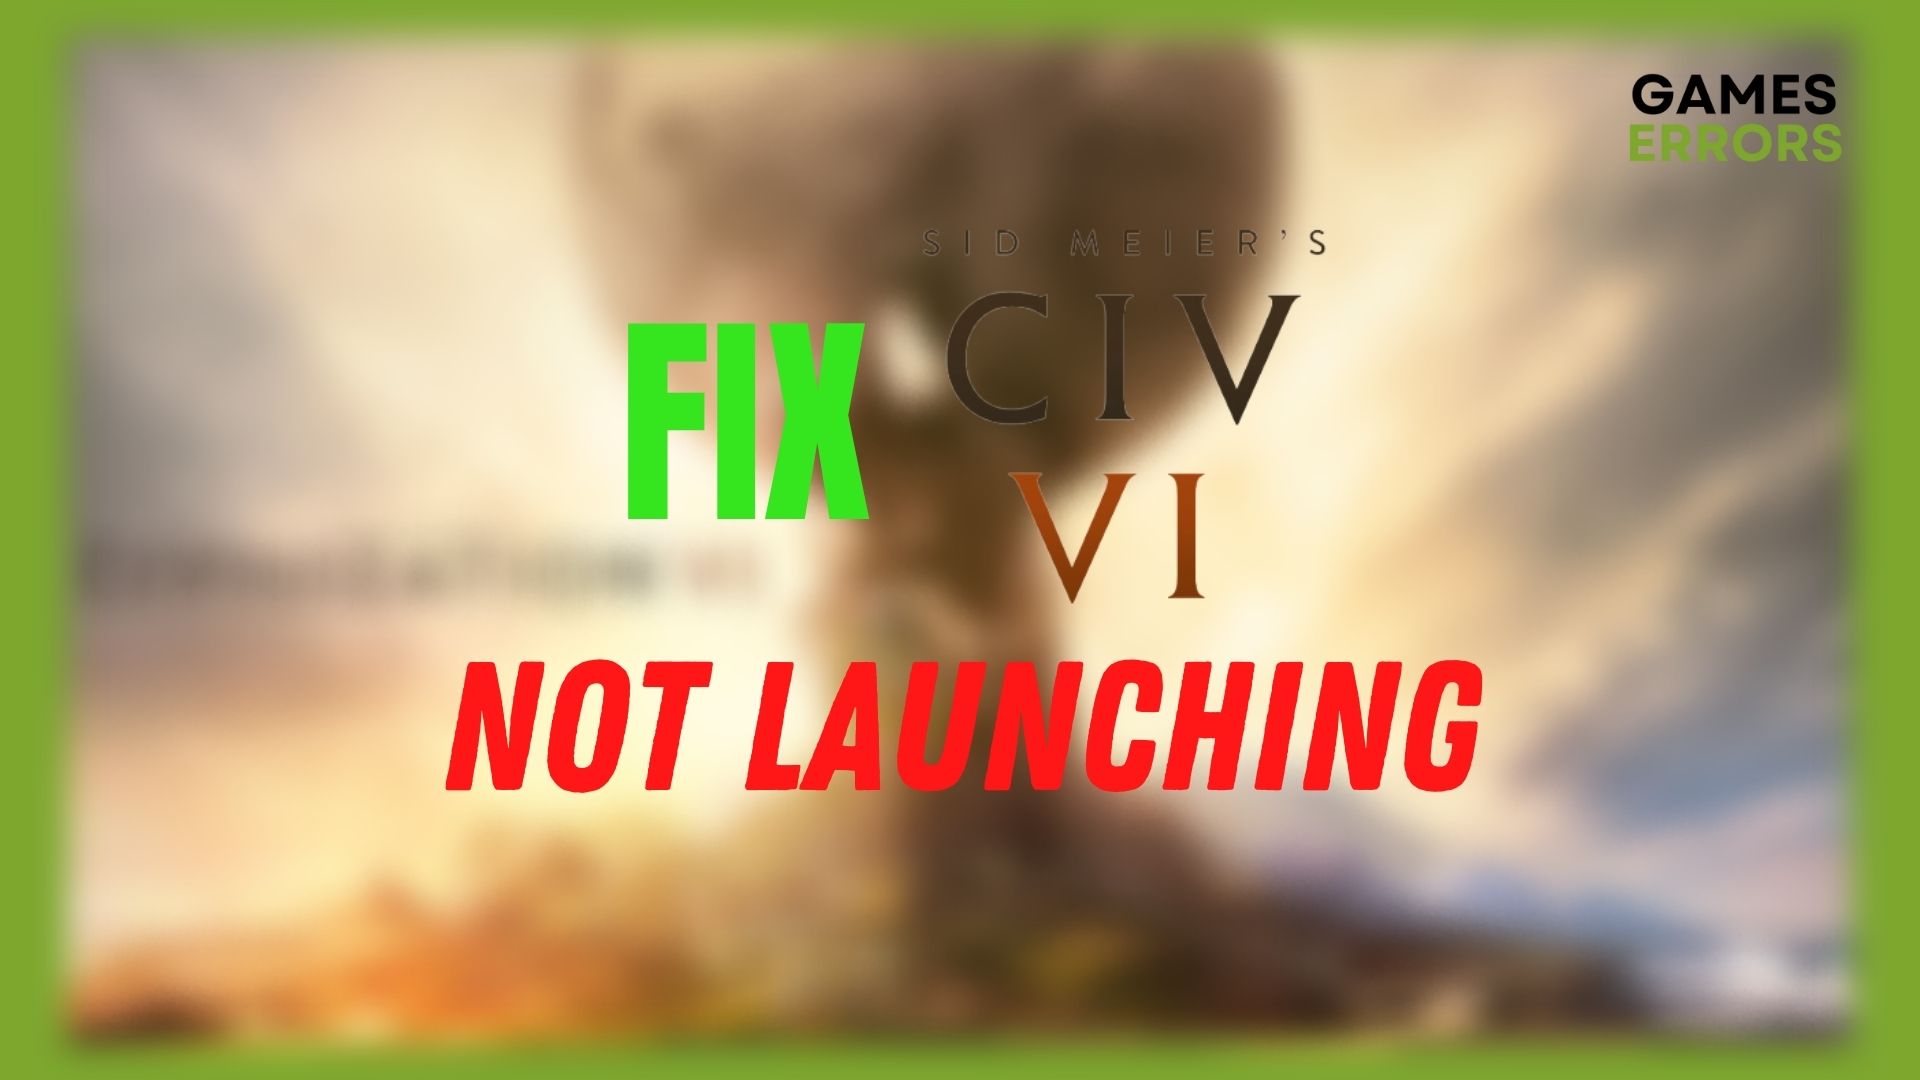 Civ 6 Not Launching